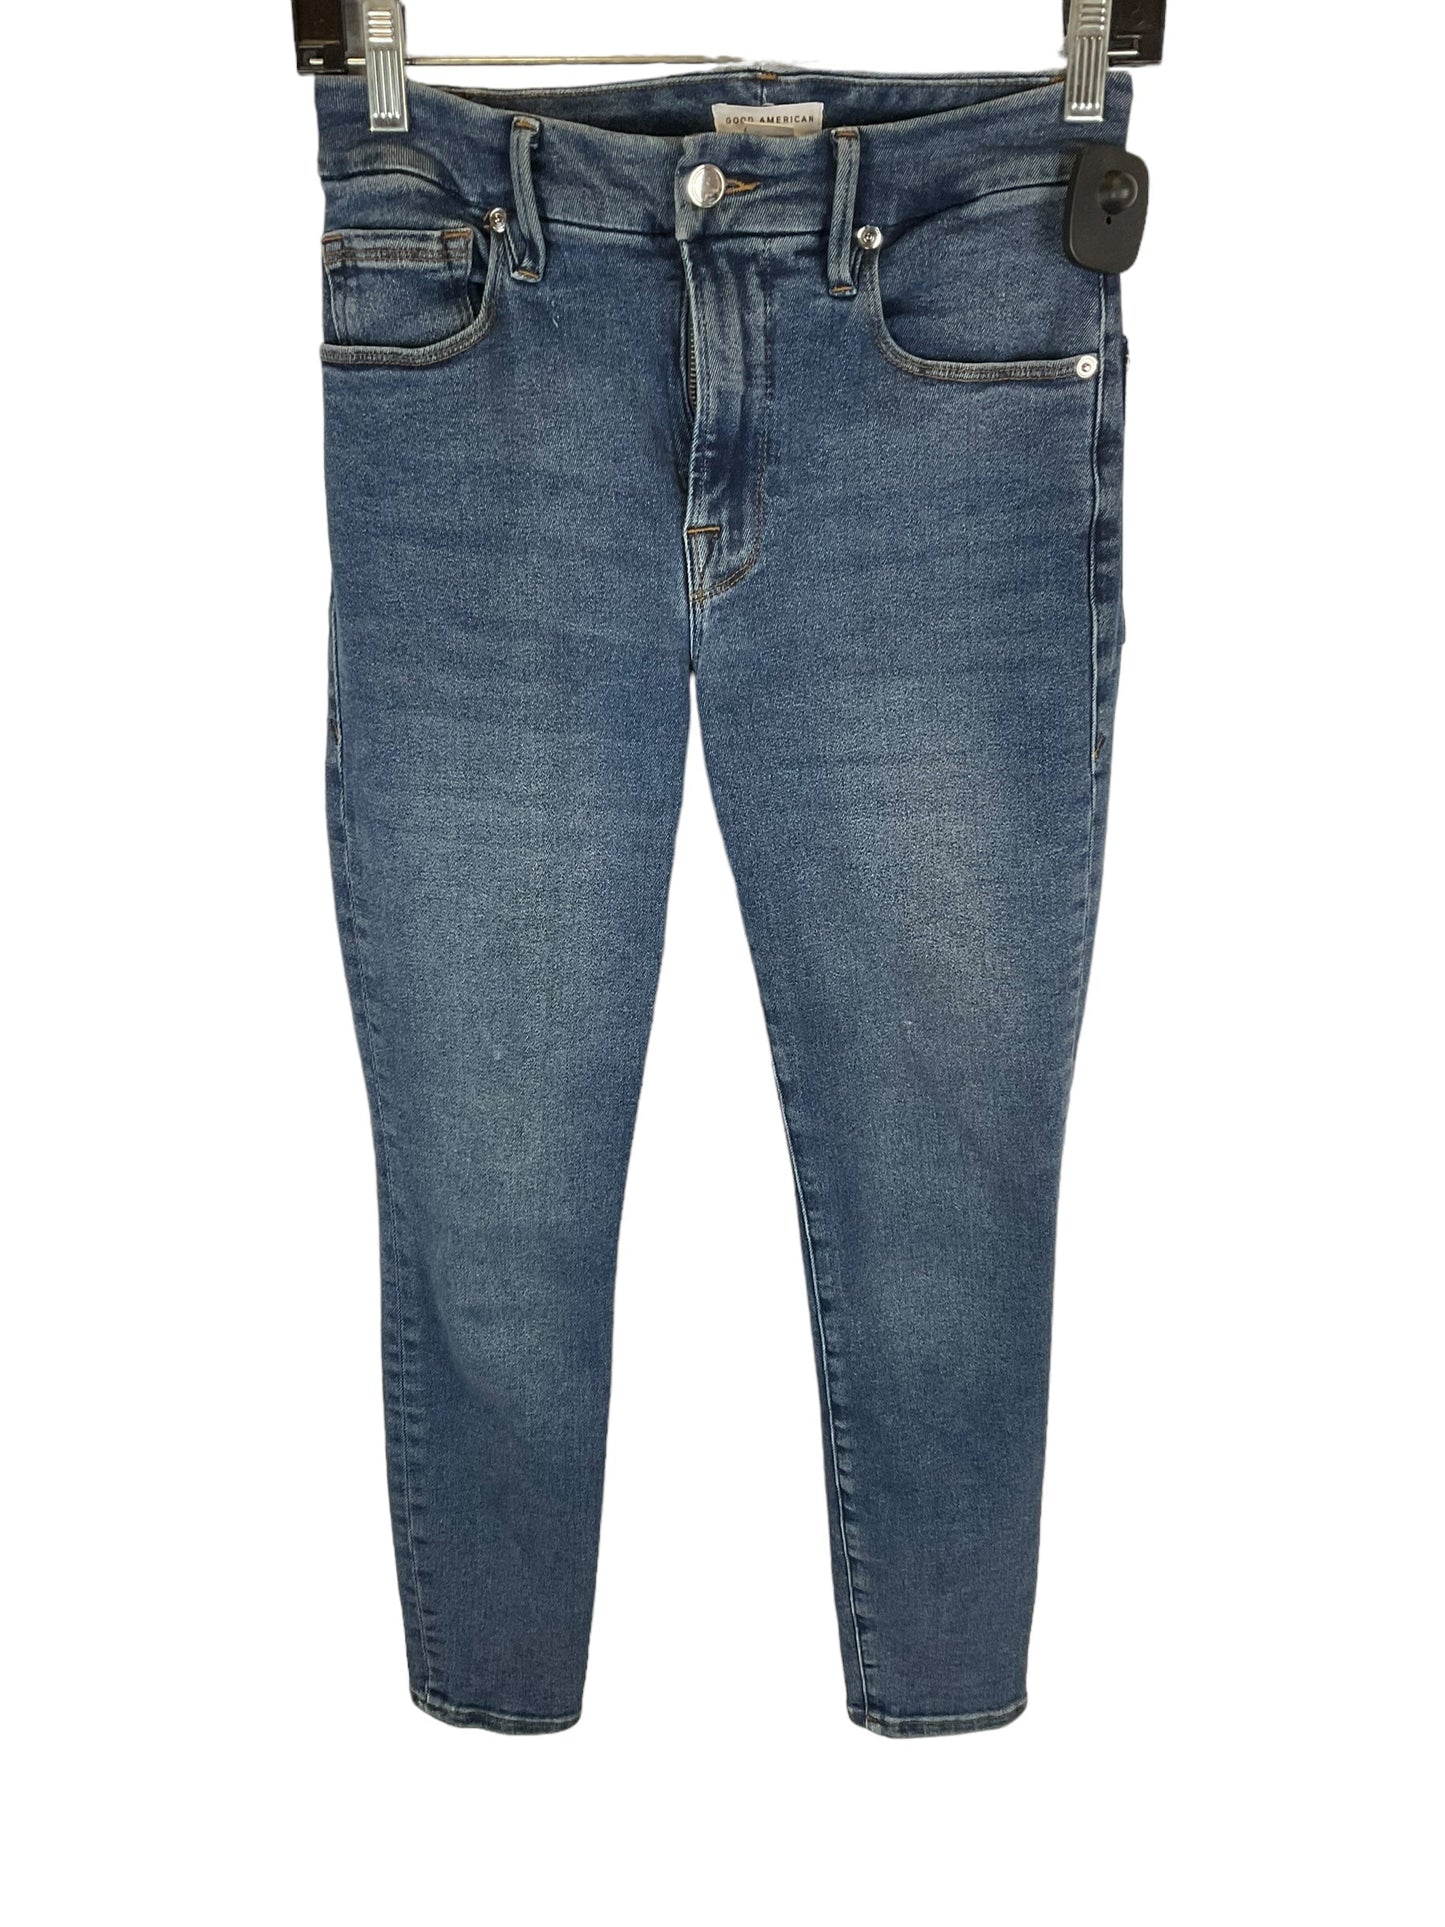 Blue Denim Jeans Designer Good American, Size 2